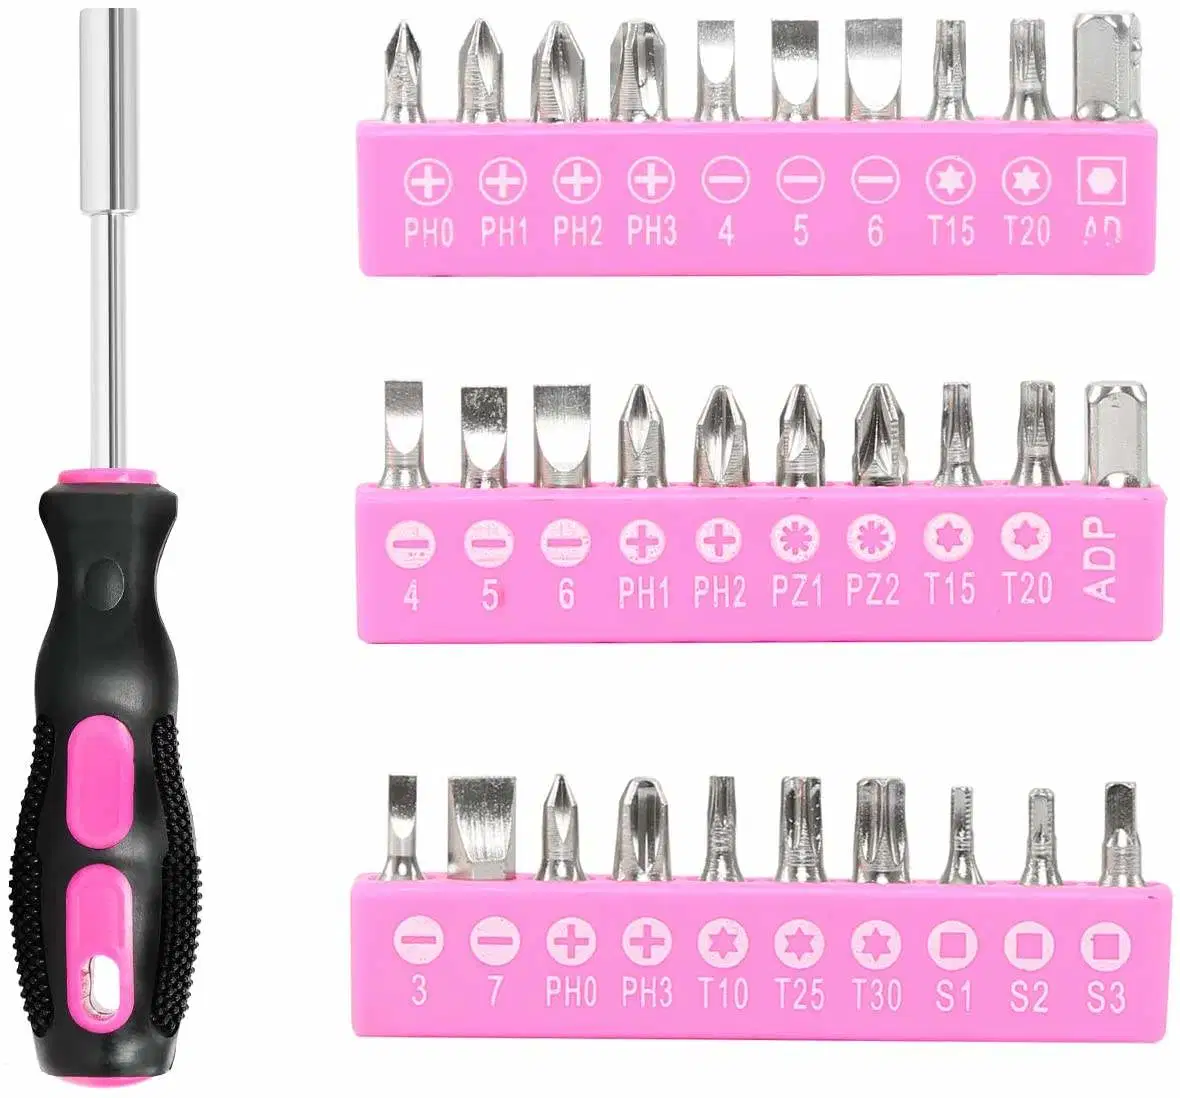 Household Hand Tool Sets /Home Repair Ladies Tool Kit Pink Tool Set Tools and Hardware/Cute Tools Set